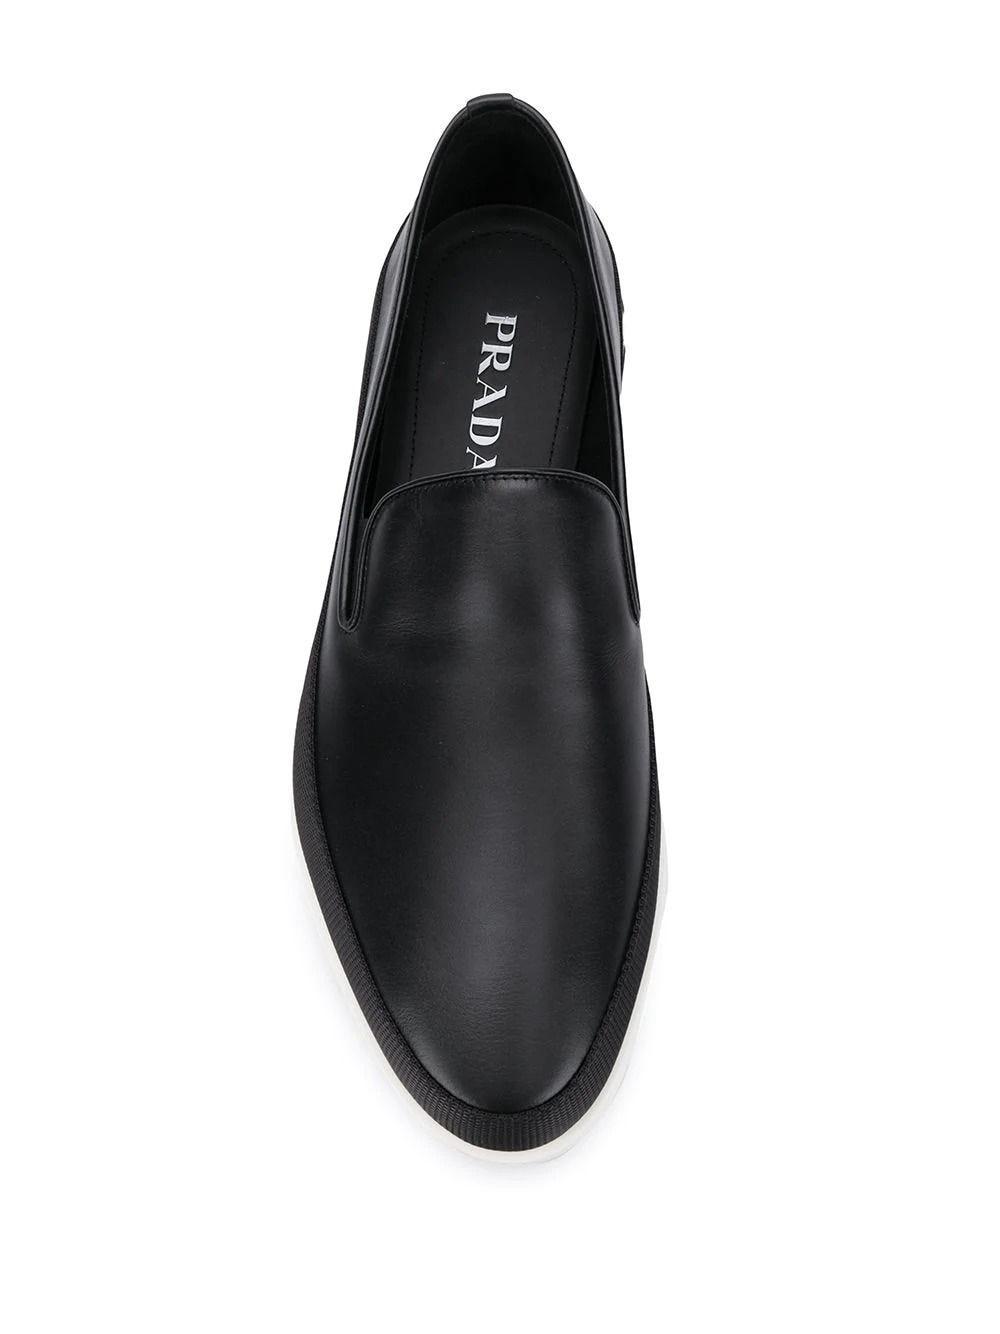 Prada Saint Tropez Leather Slip-on Sneakers in Black for Men | Lyst